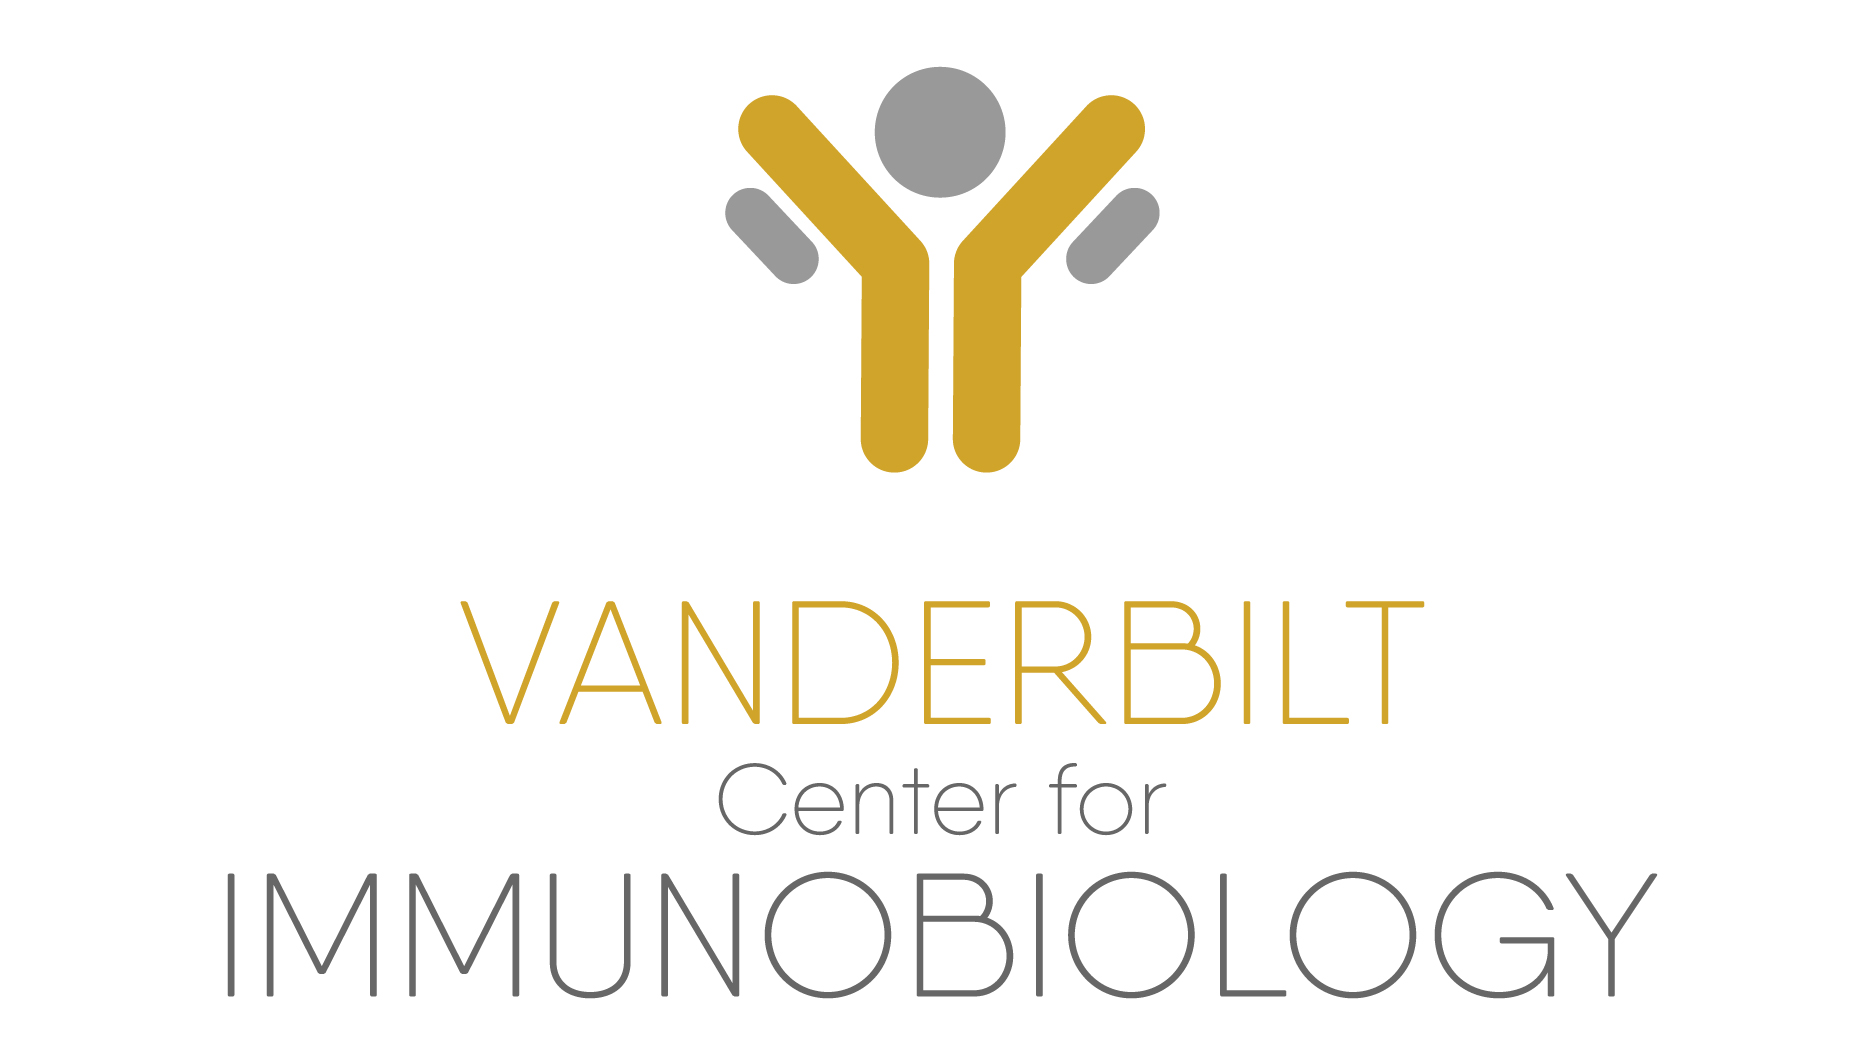 Center for Immunobiology & Vanderbilt Center for Translational Immunology and Infectious Disease